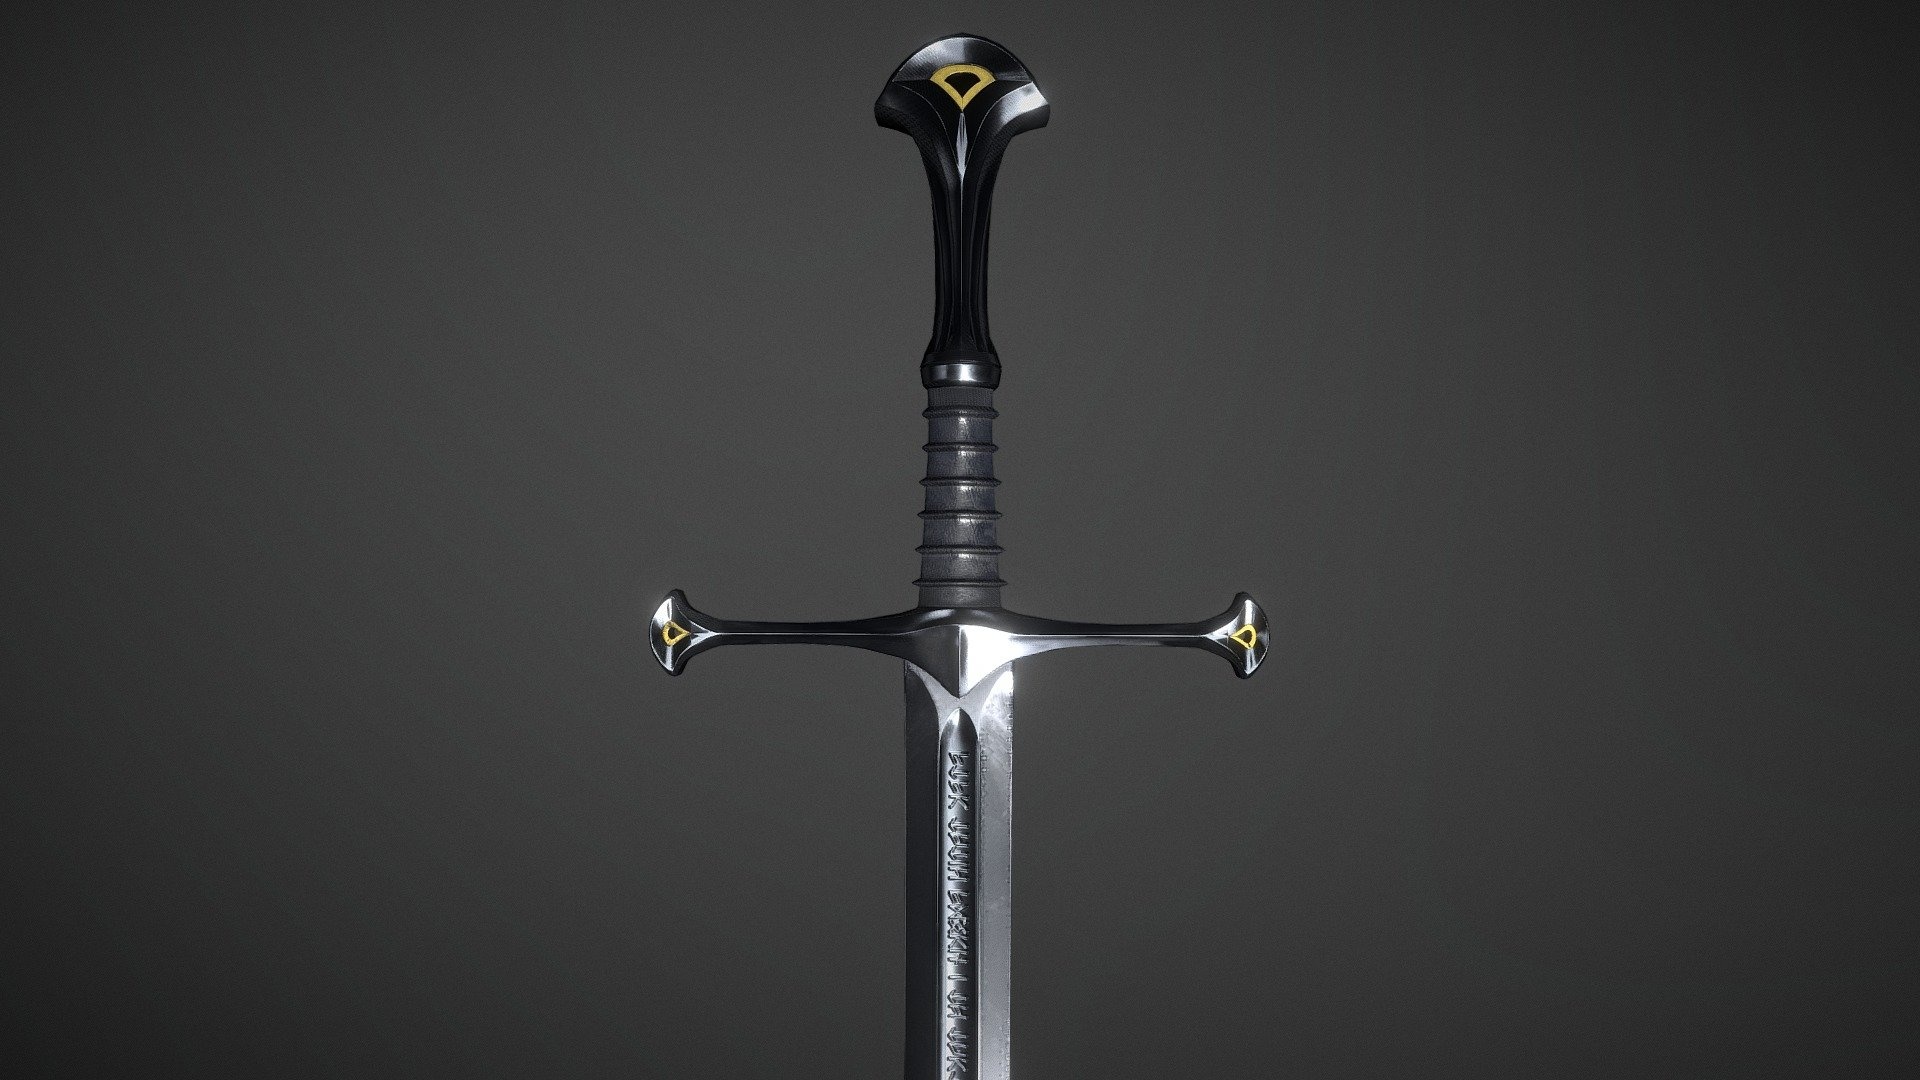 Narsil Sword, 3D model download, Detailed design, Intricate craftsmanship, 1920x1080 Full HD Desktop